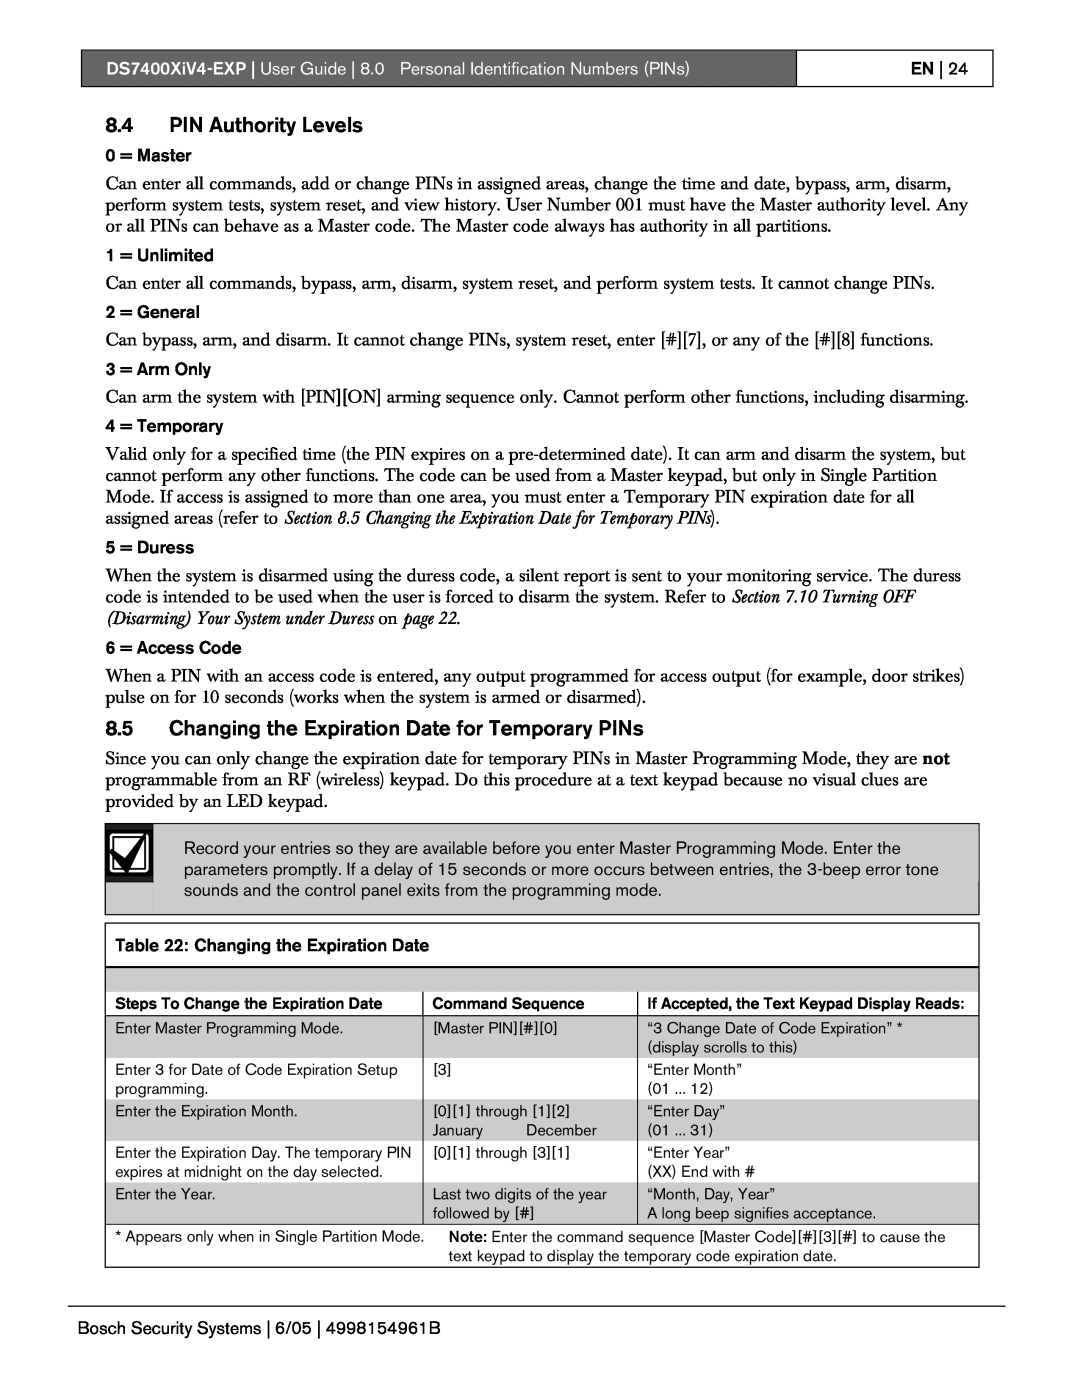 Bosch Appliances DS7400XIV4-EXP manual 8.4PIN Authority Levels 